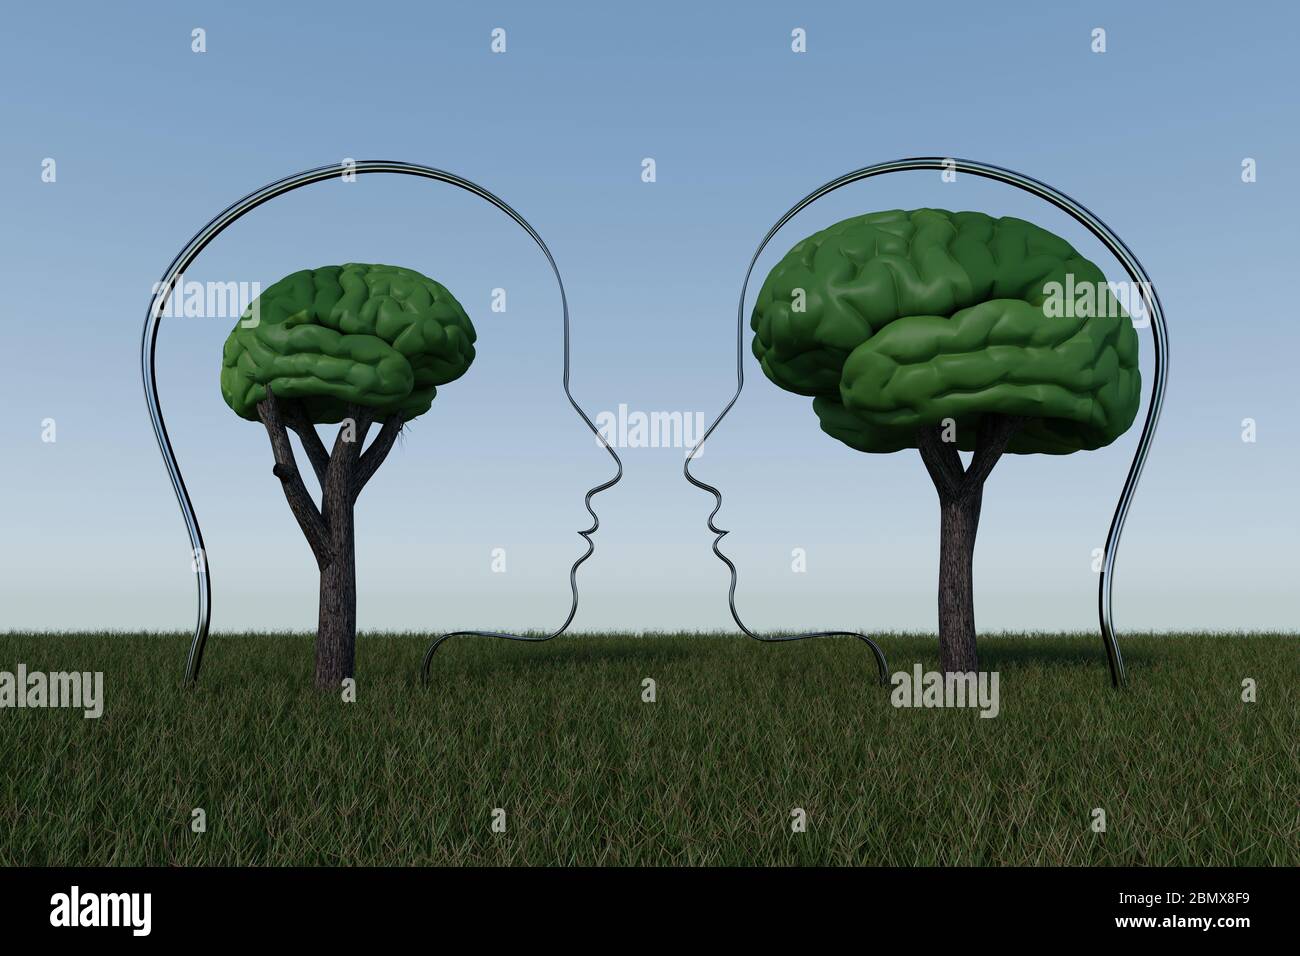 Tree Shaped Like A Human Brain Concept For Brain Or Mental Health